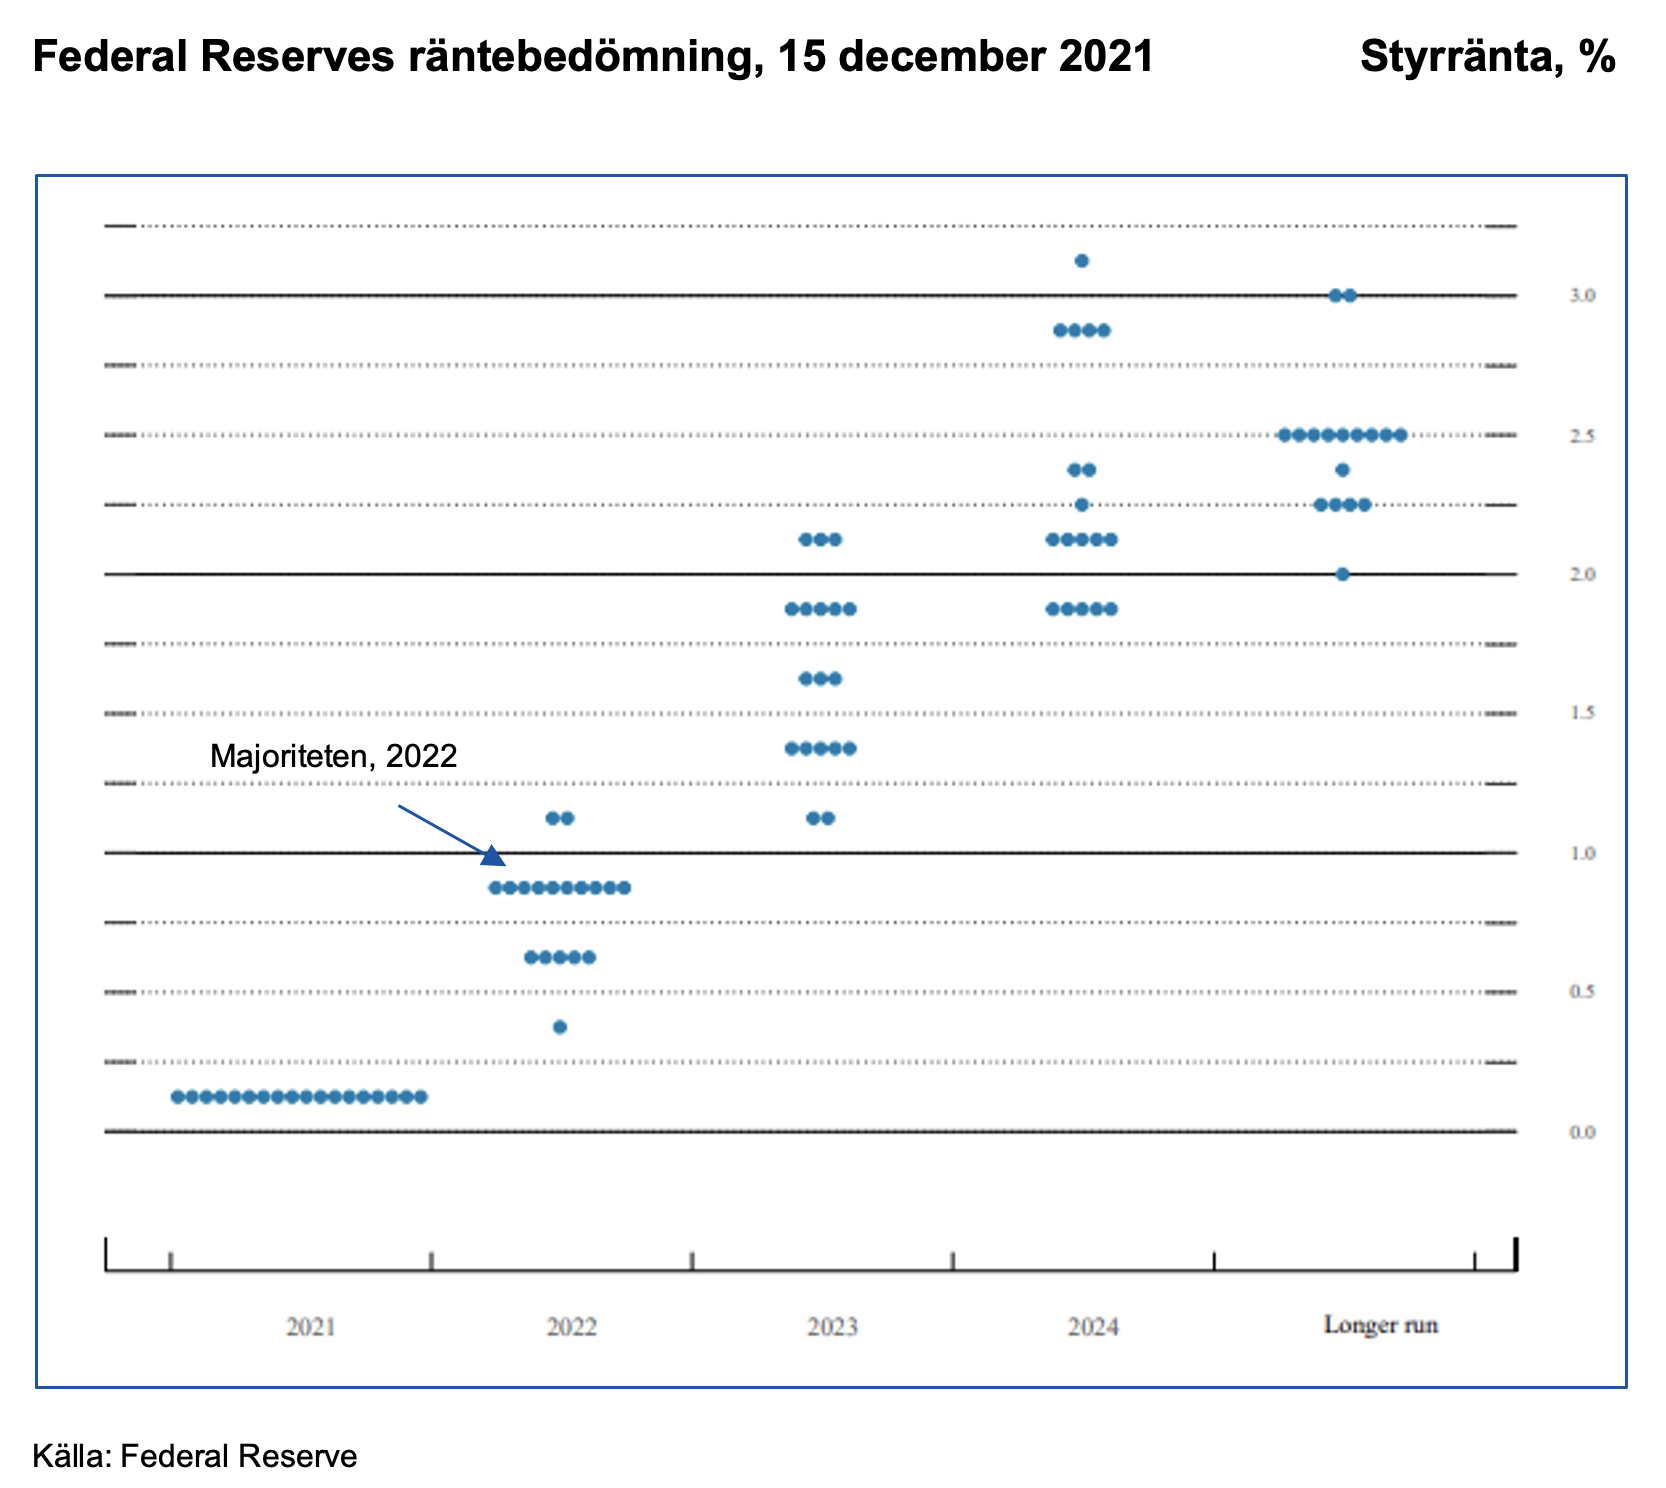 federal-reserves-ranebedomning-15-de-2021.png